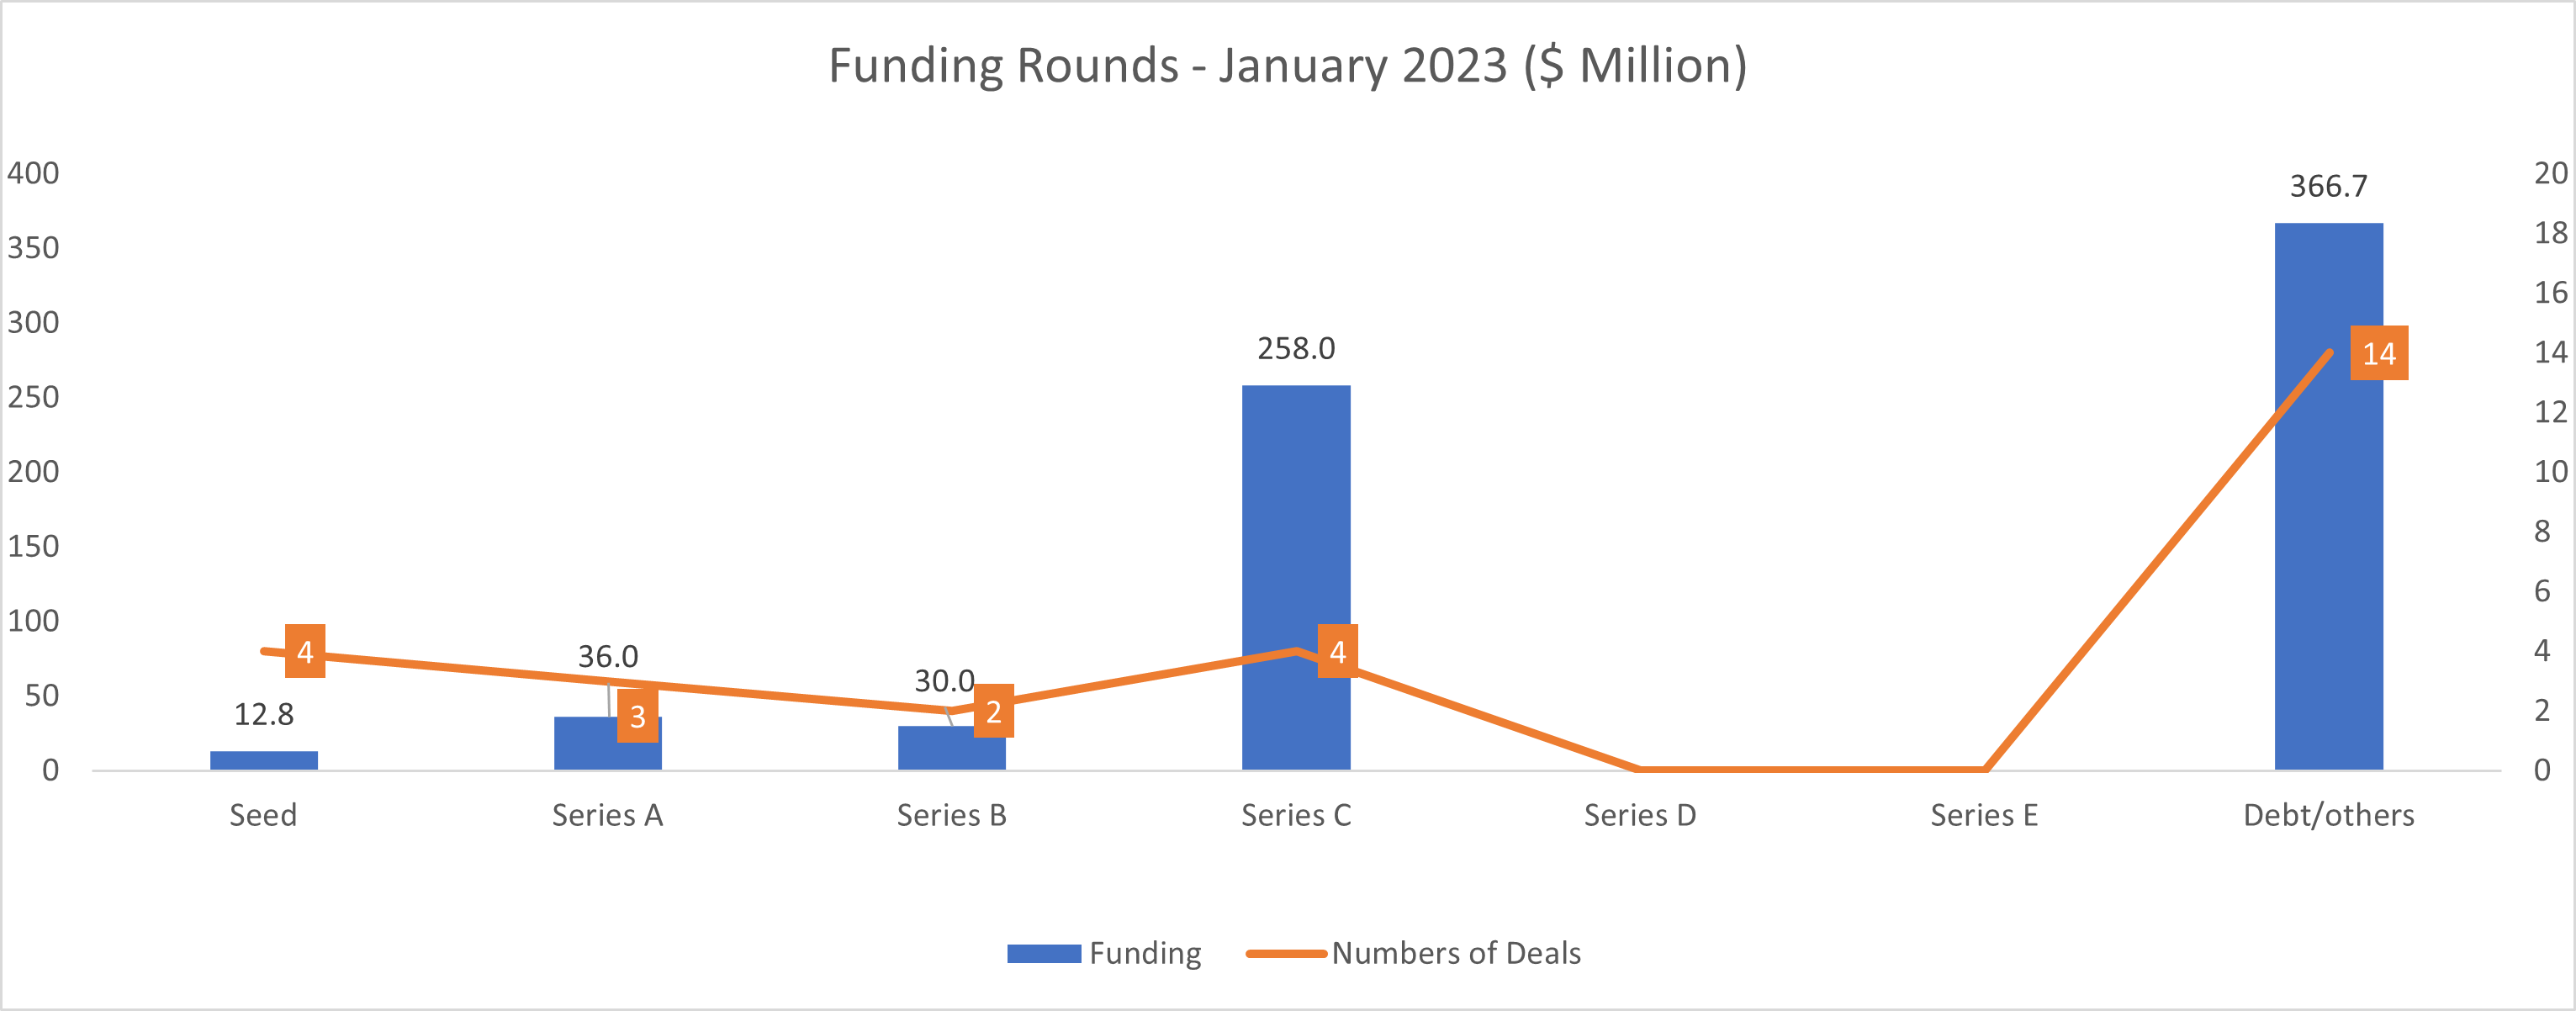 Venture Funding Rounds - January 2023